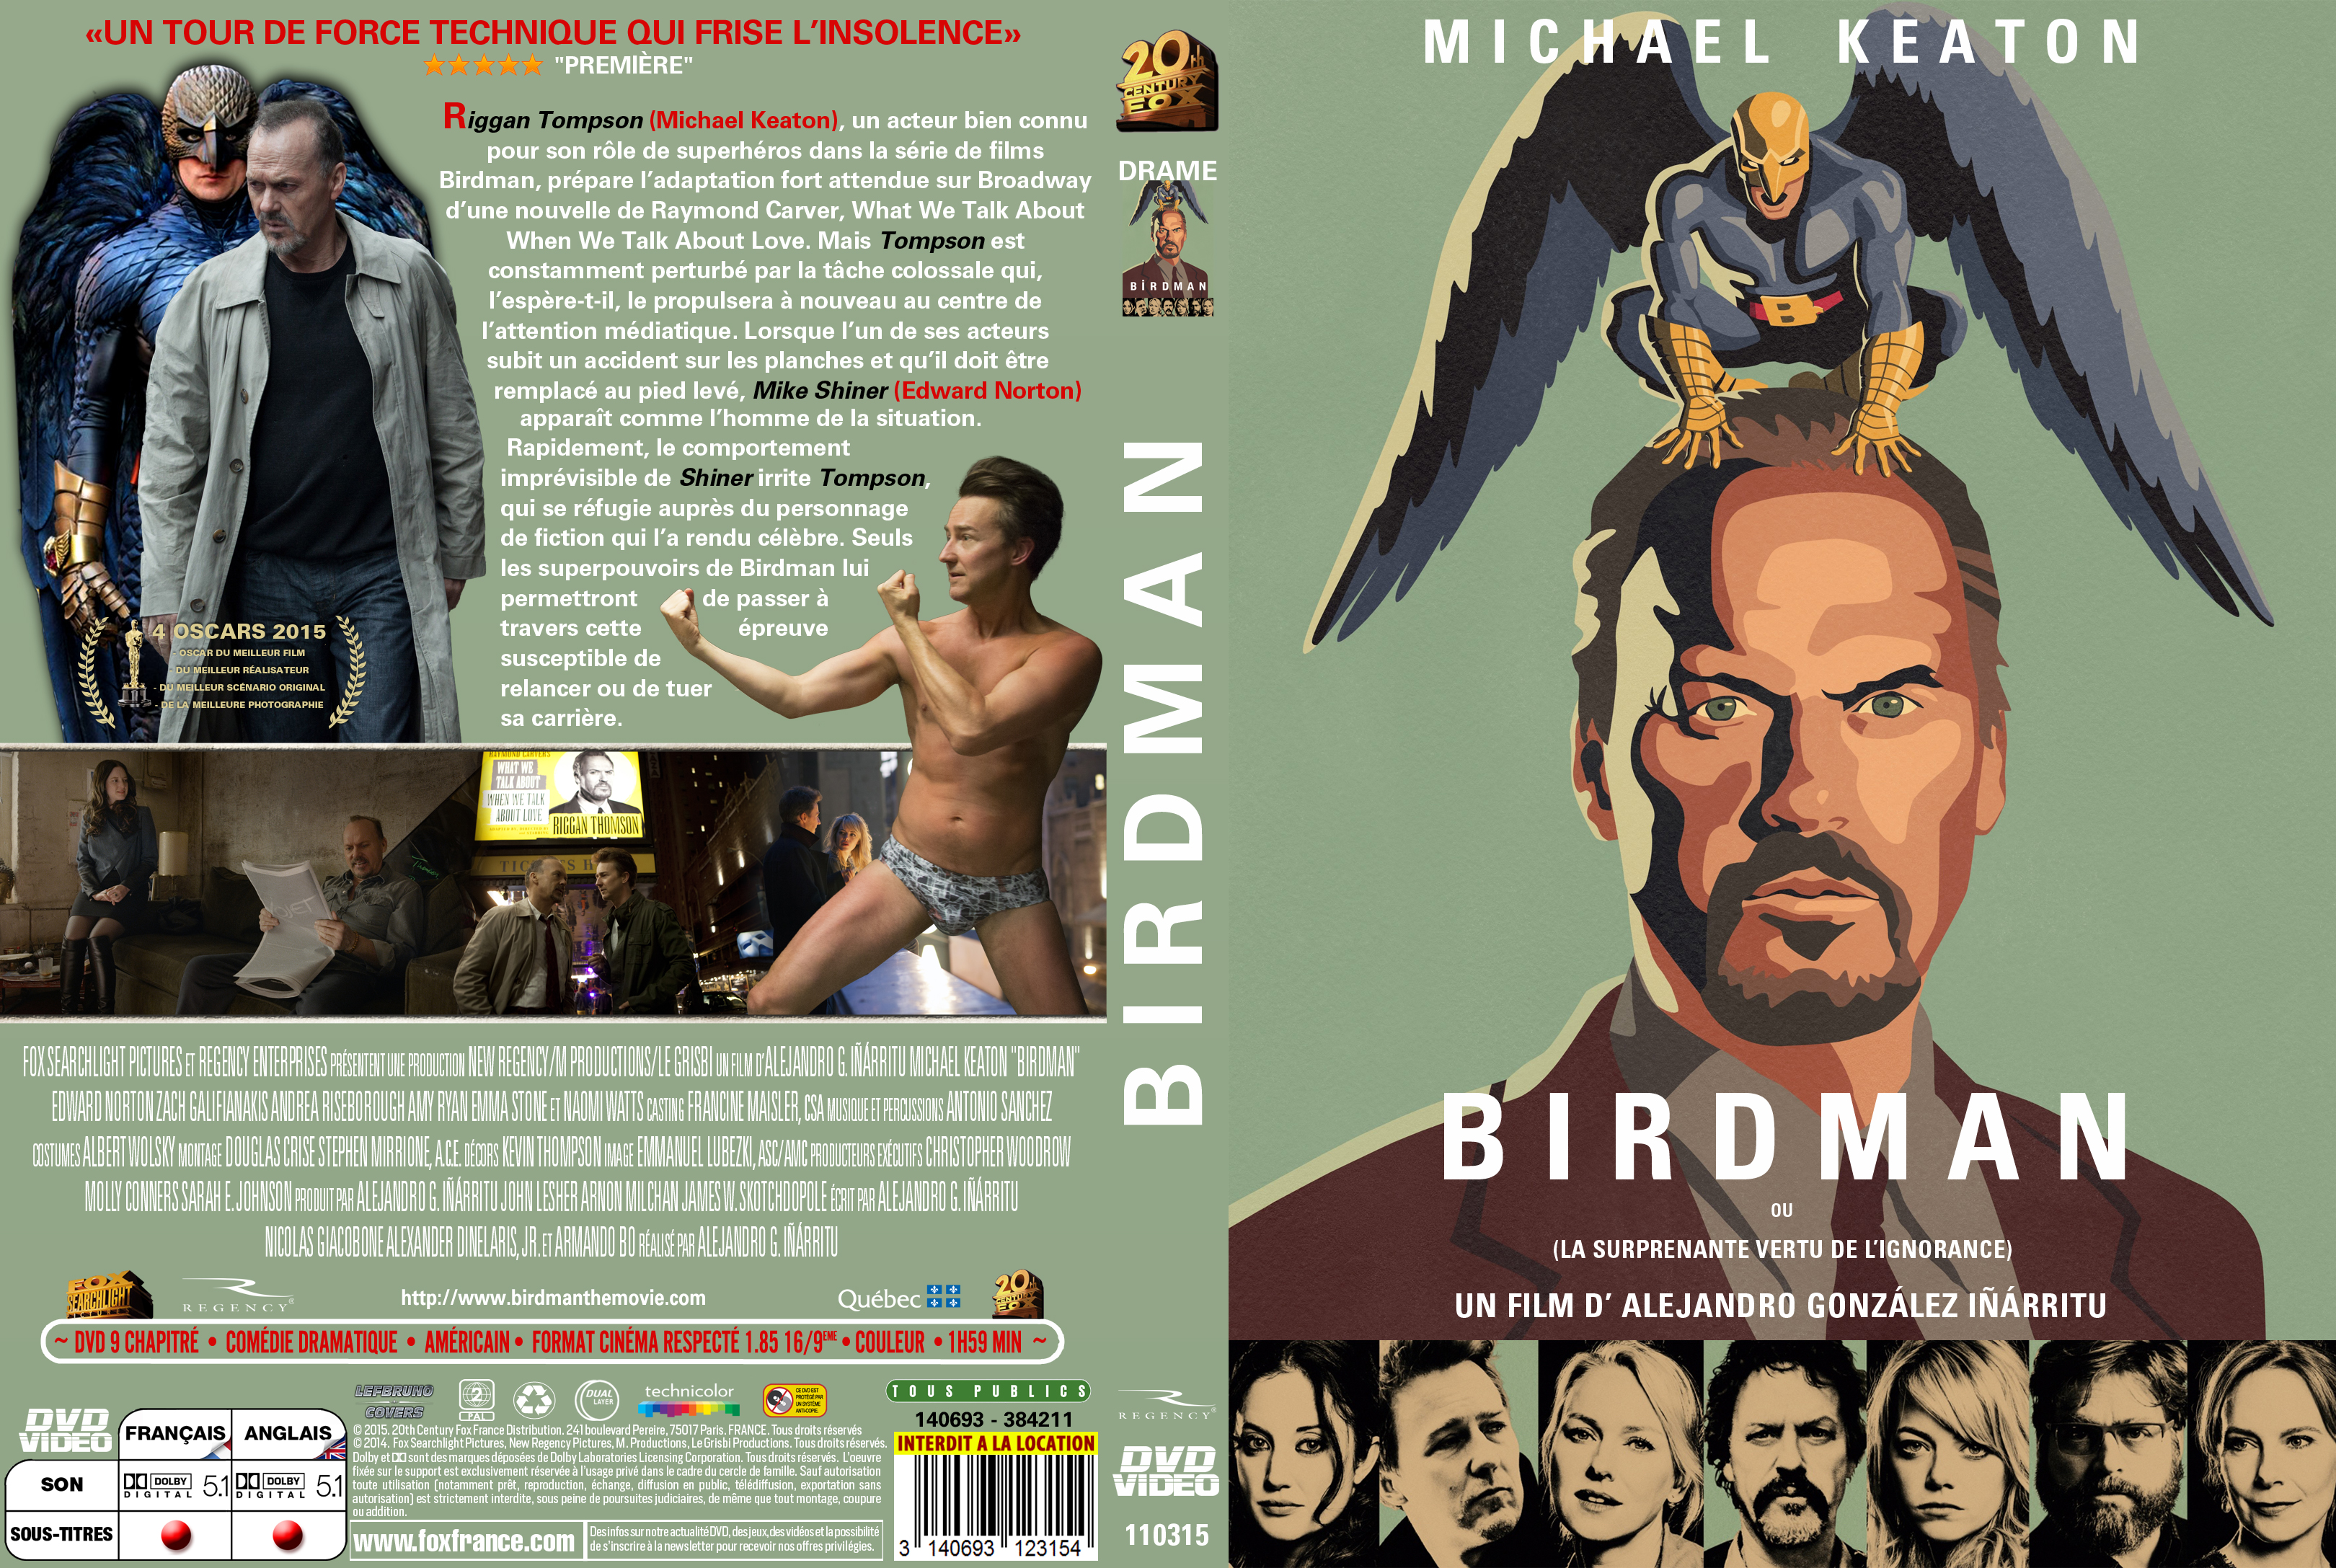 Jaquette DVD Birdman custom